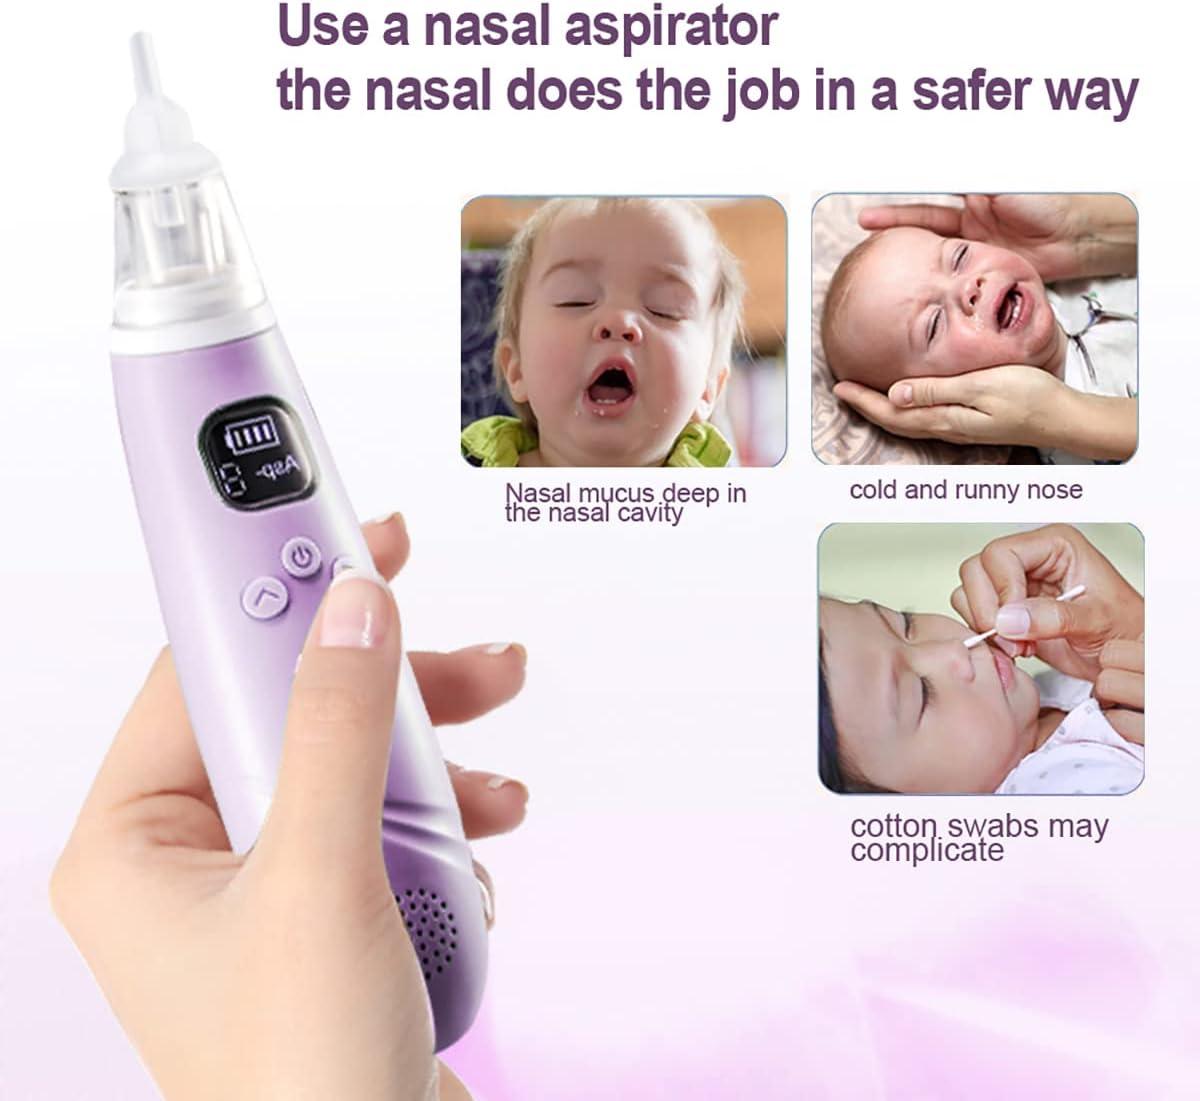 Baby Sucker Cleaner Sniffling Equipment Safe Hygienic Nose Aspirator Kid Nasal  Aspirator Electric Newborn – Baby On The Way